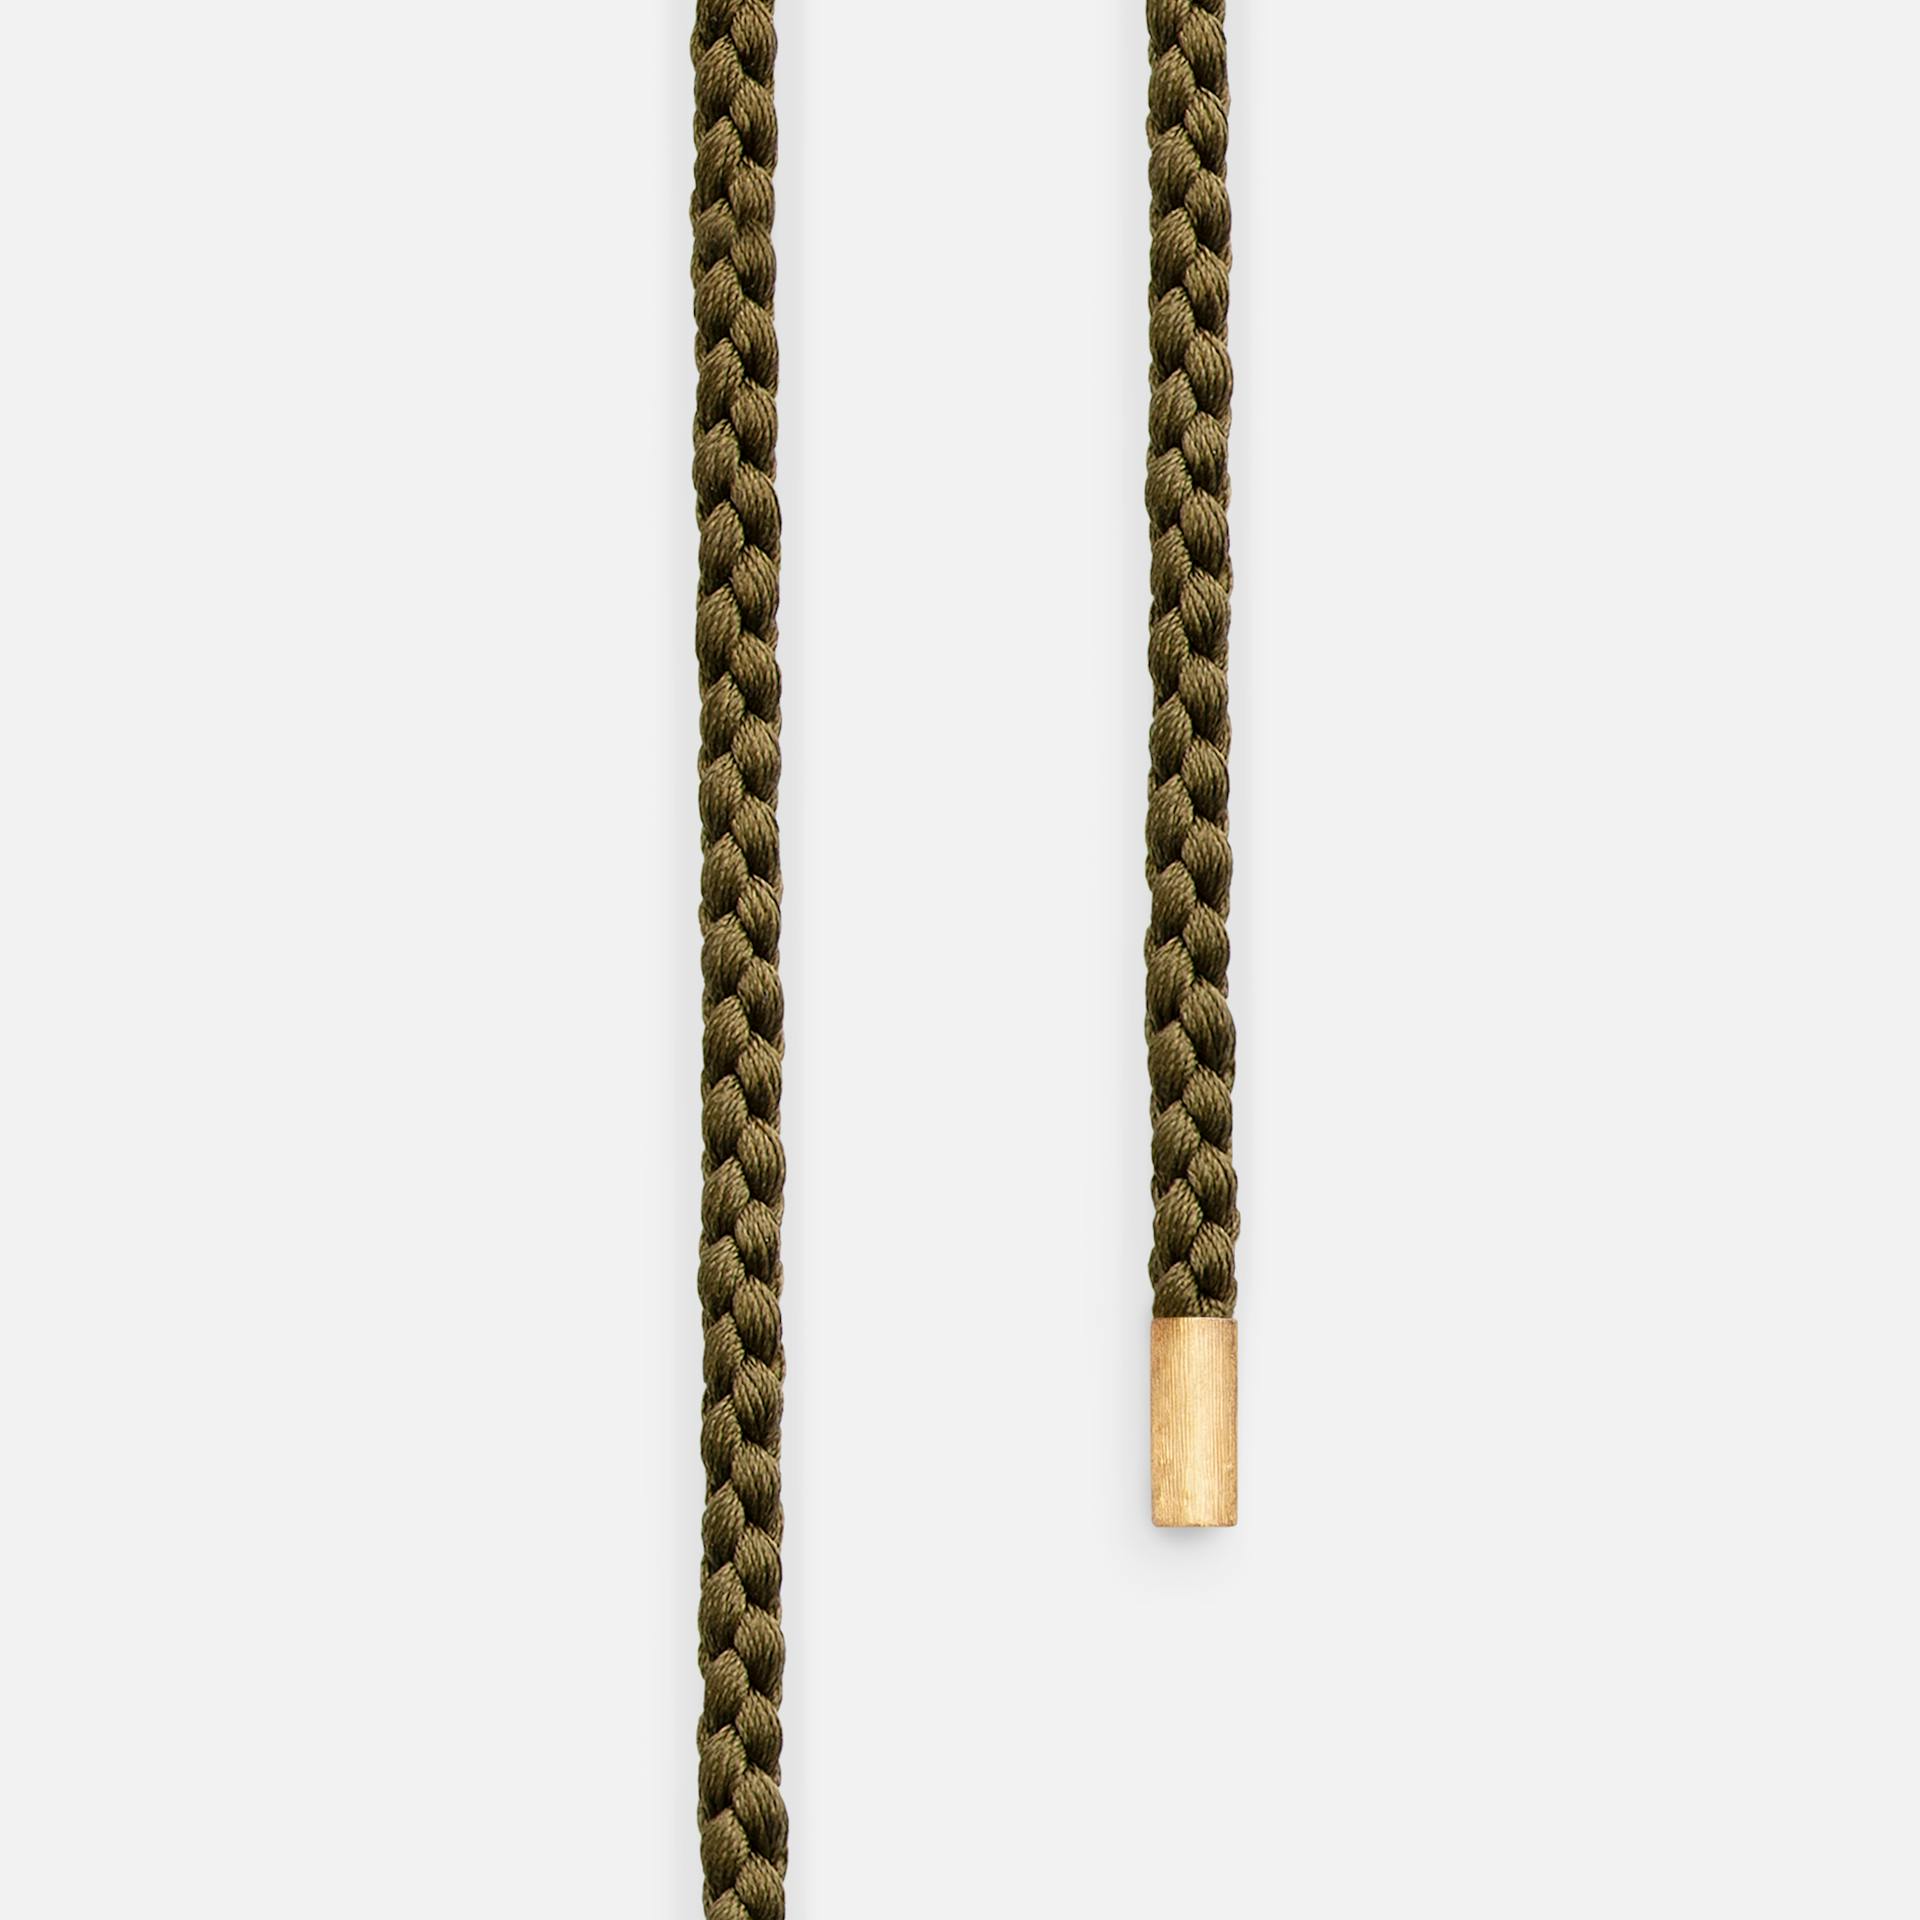 Mokuba Silk String Necklace with 18 Karat, Textured Yellow Gold End Pieces  |  Ole Lynggaard Copenhagen   